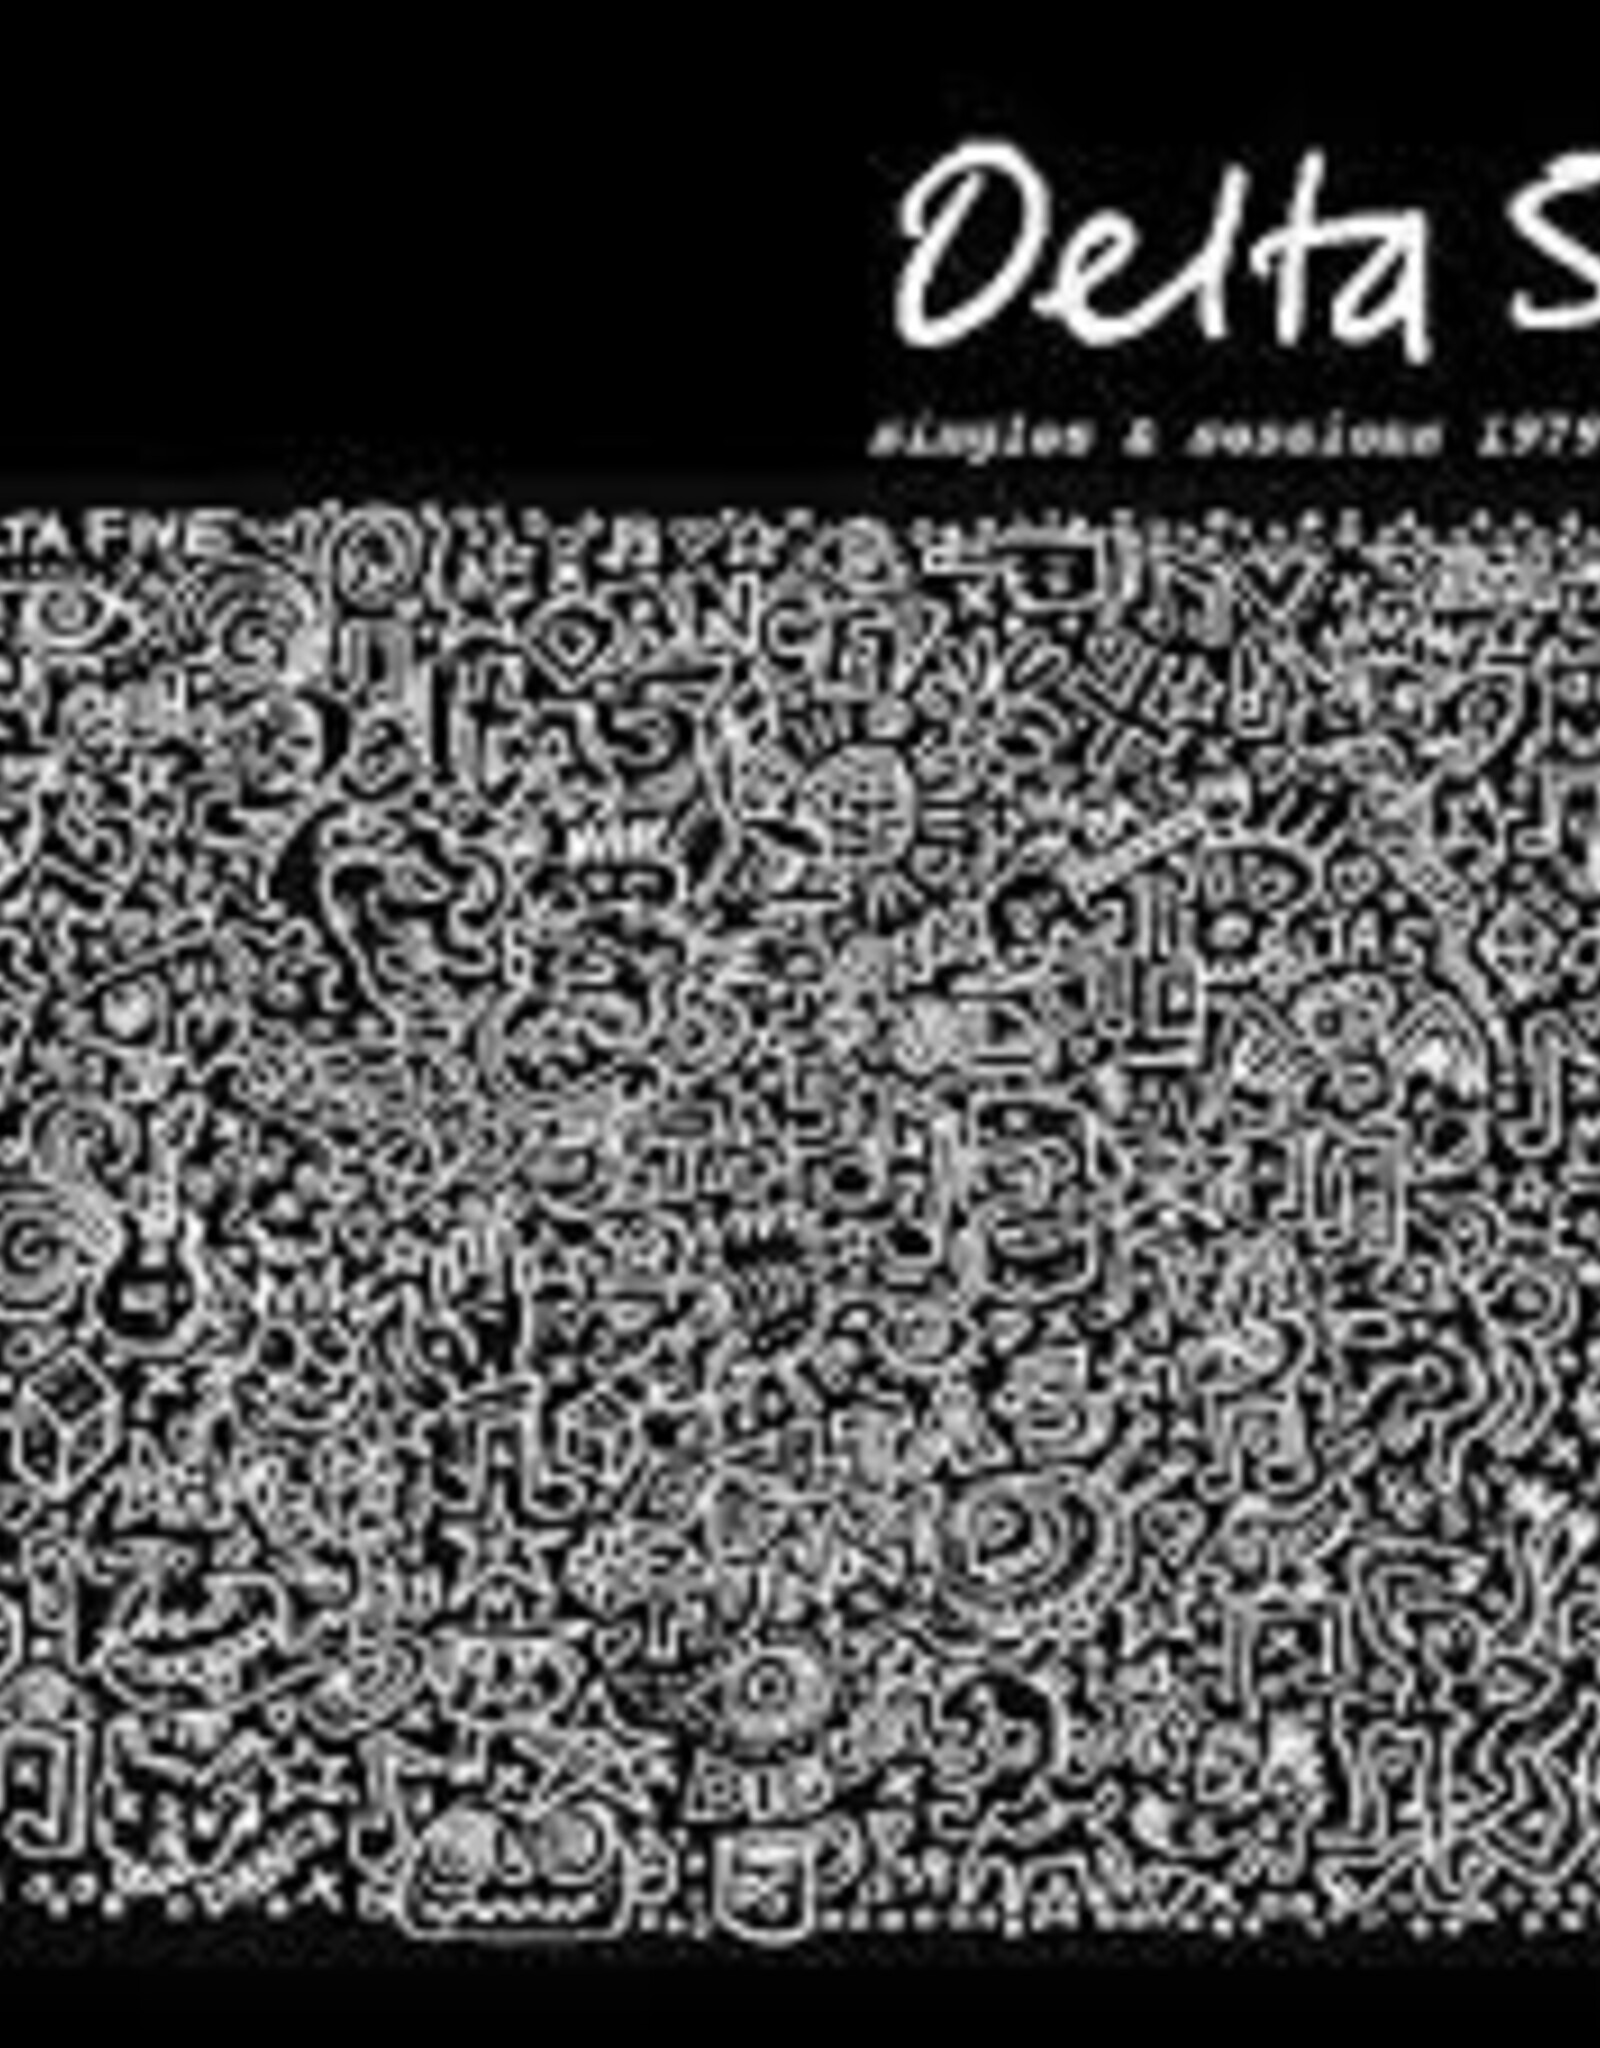 Delta 5- Singles & Sessions 1979-1981 (sea glass vinyl)